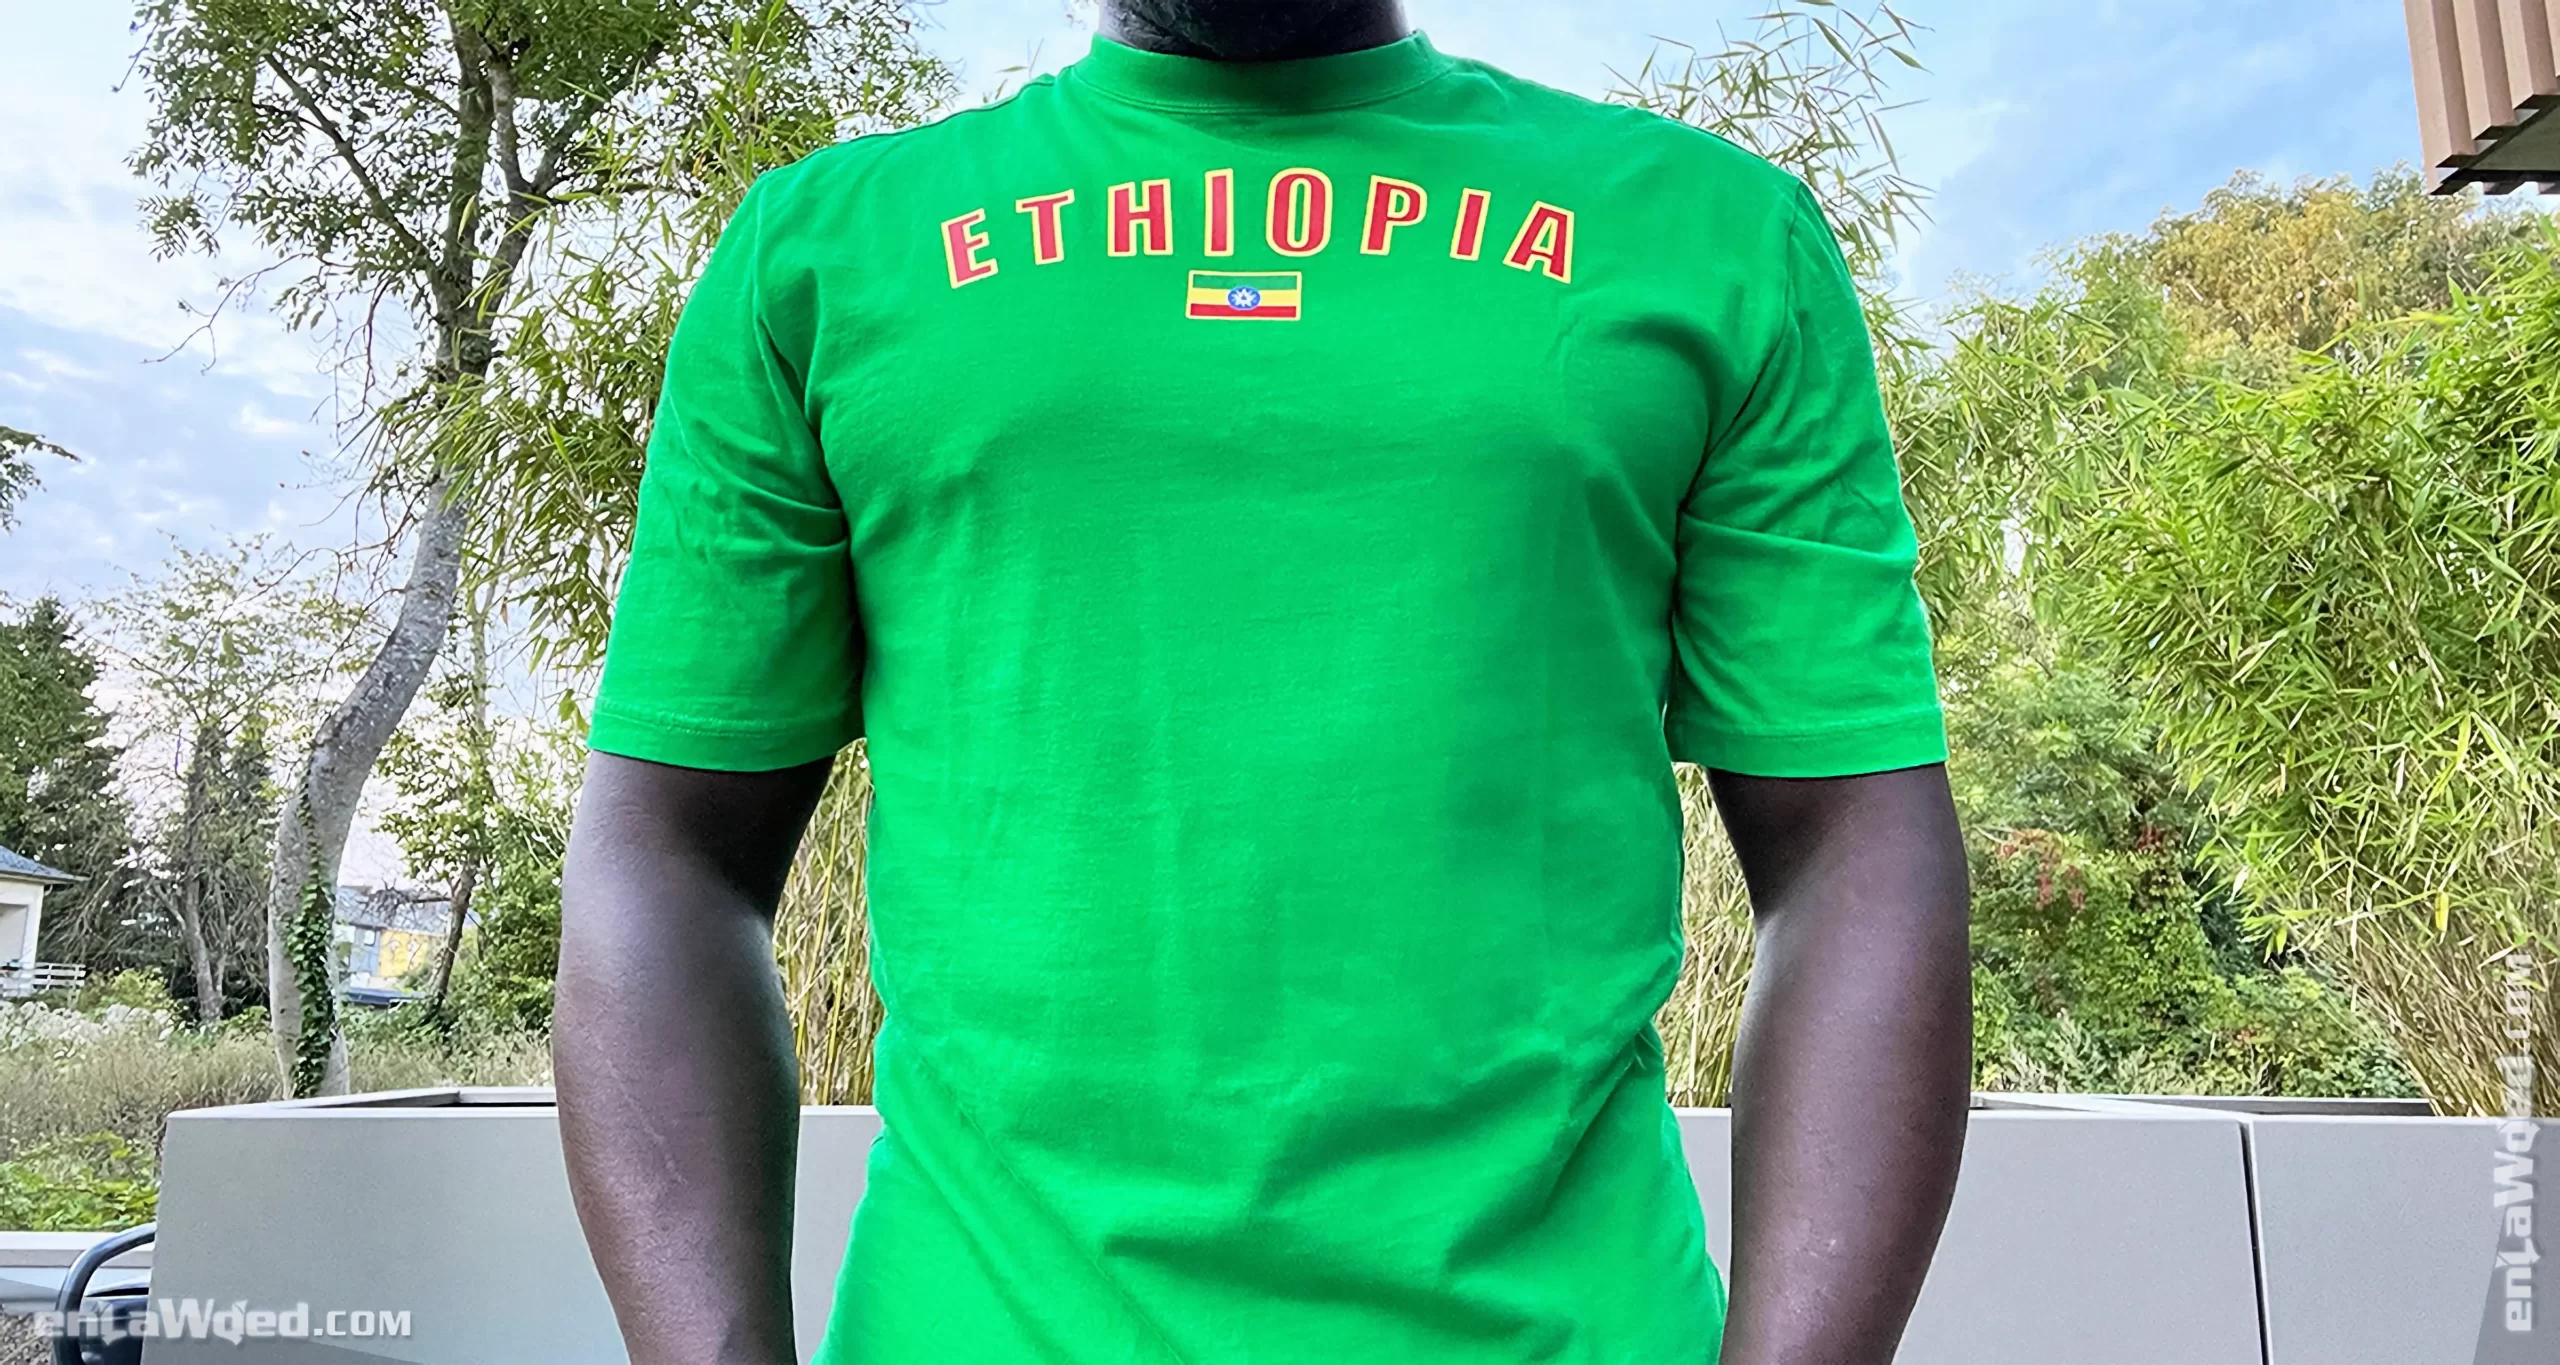 Men’s 2008 Ethiopia T-Shirt by Adidas Originals: Spontaneous (EnLawded.com file #lp1n9zil126205ohbuyk6hiei)